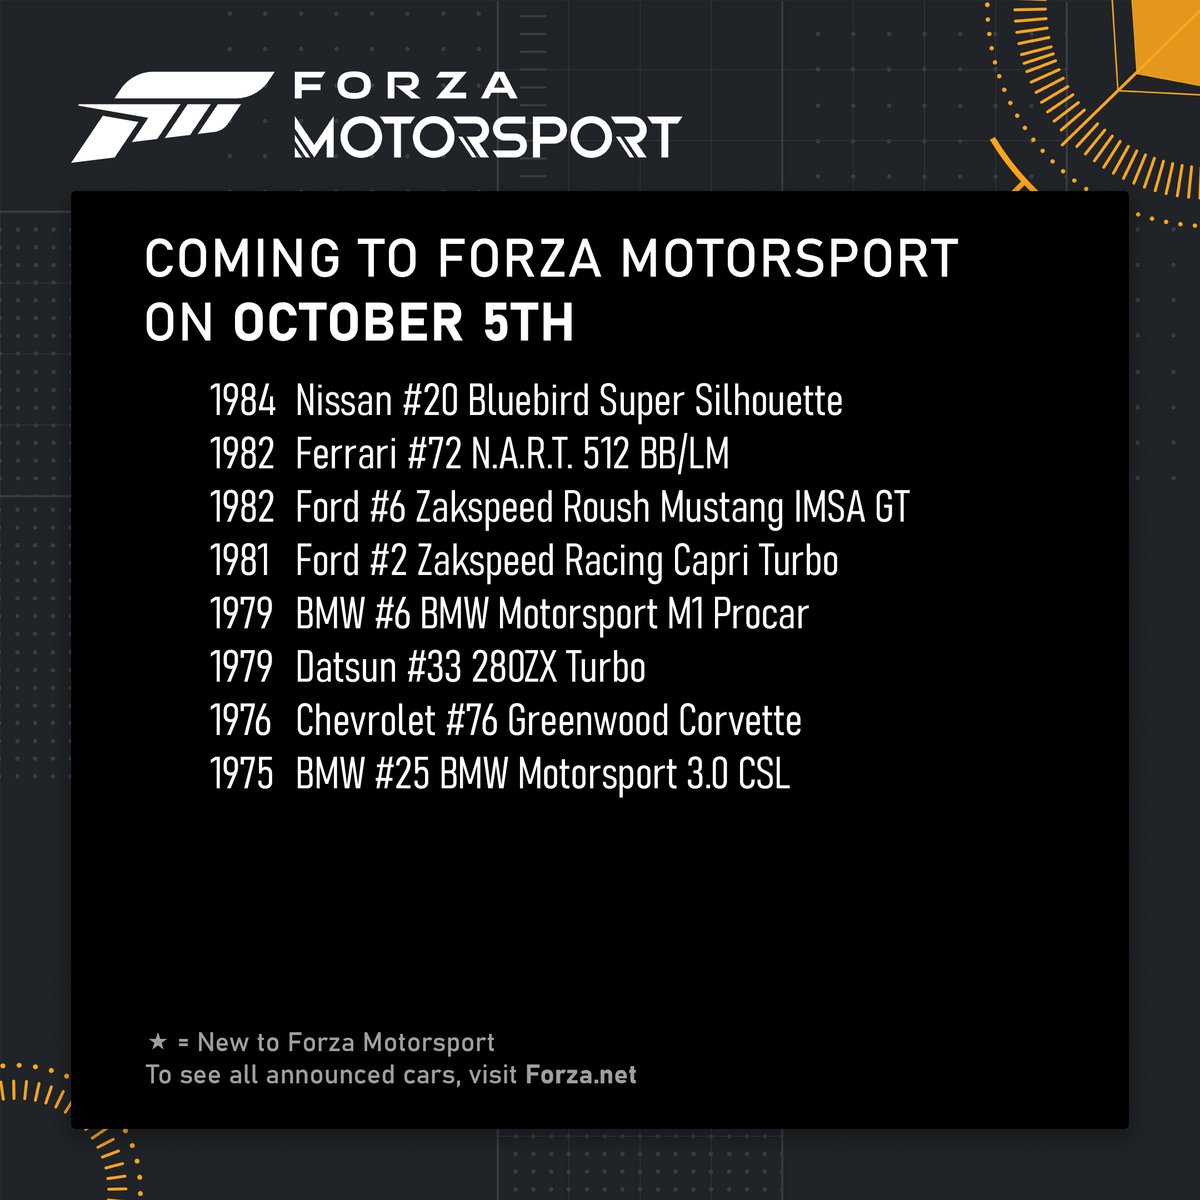 ForzaMotorsport tweet picture